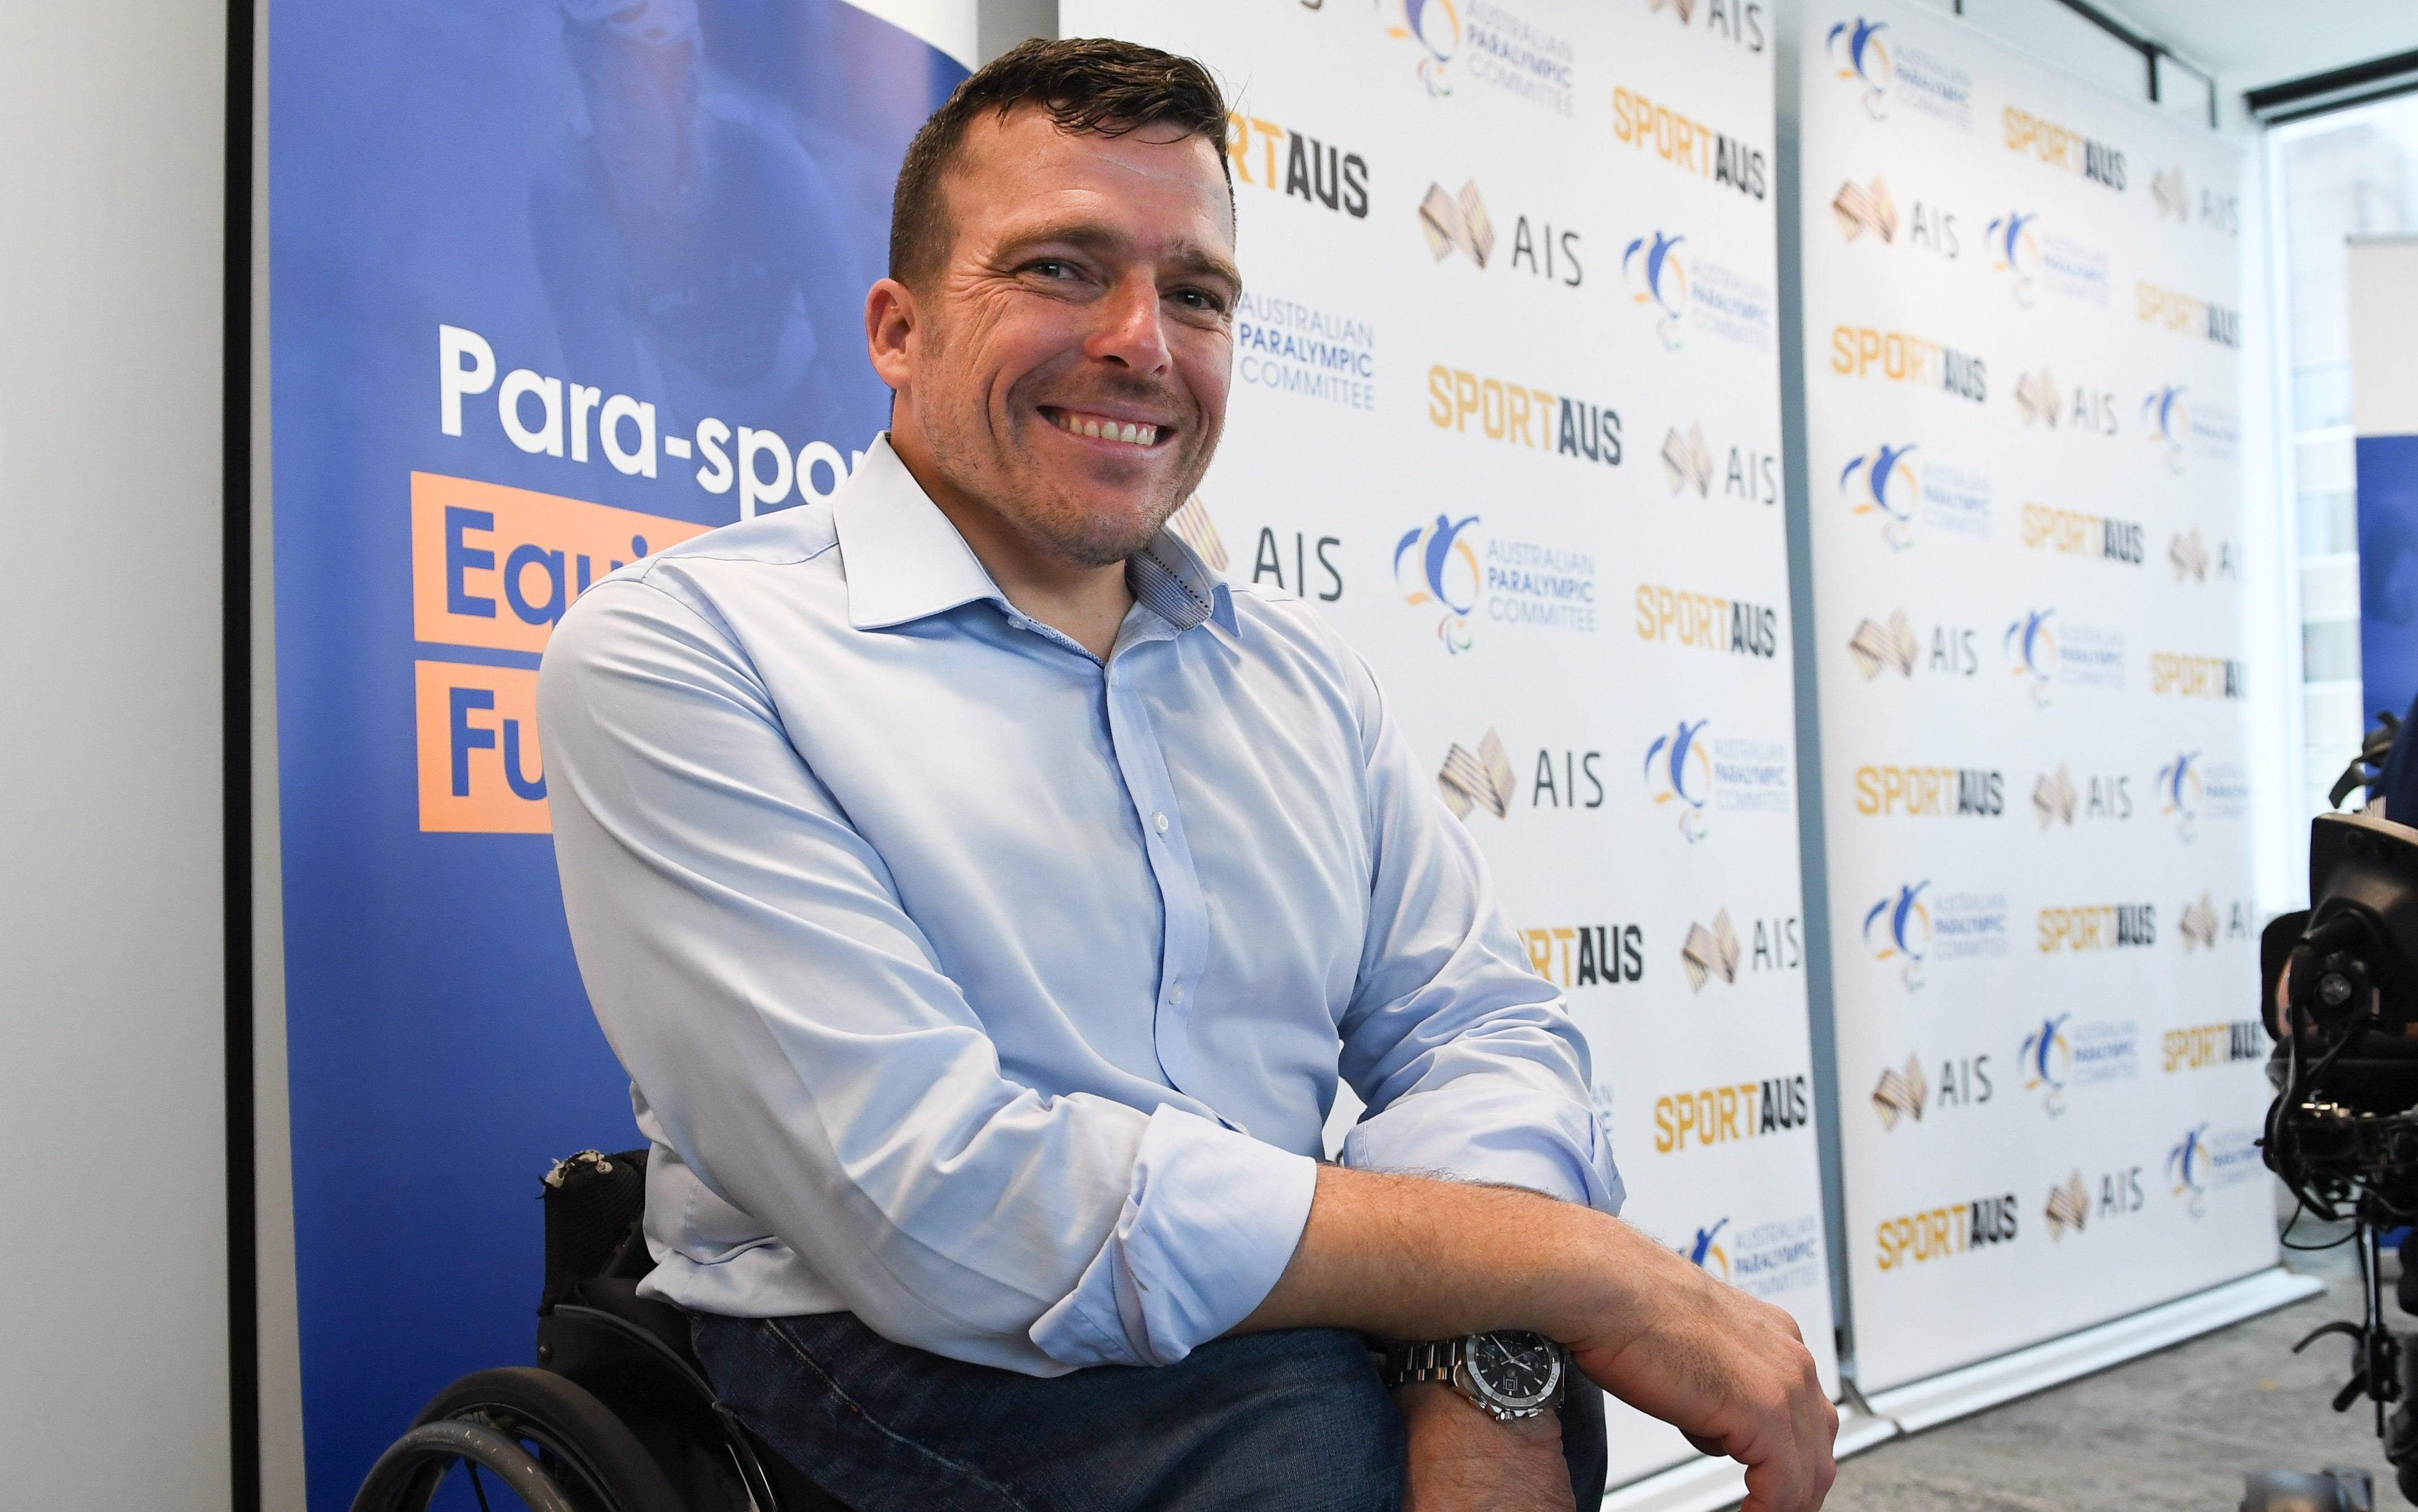 Paralympics Australia’s Para-sport Equipment Fund celebrates first corporate donation